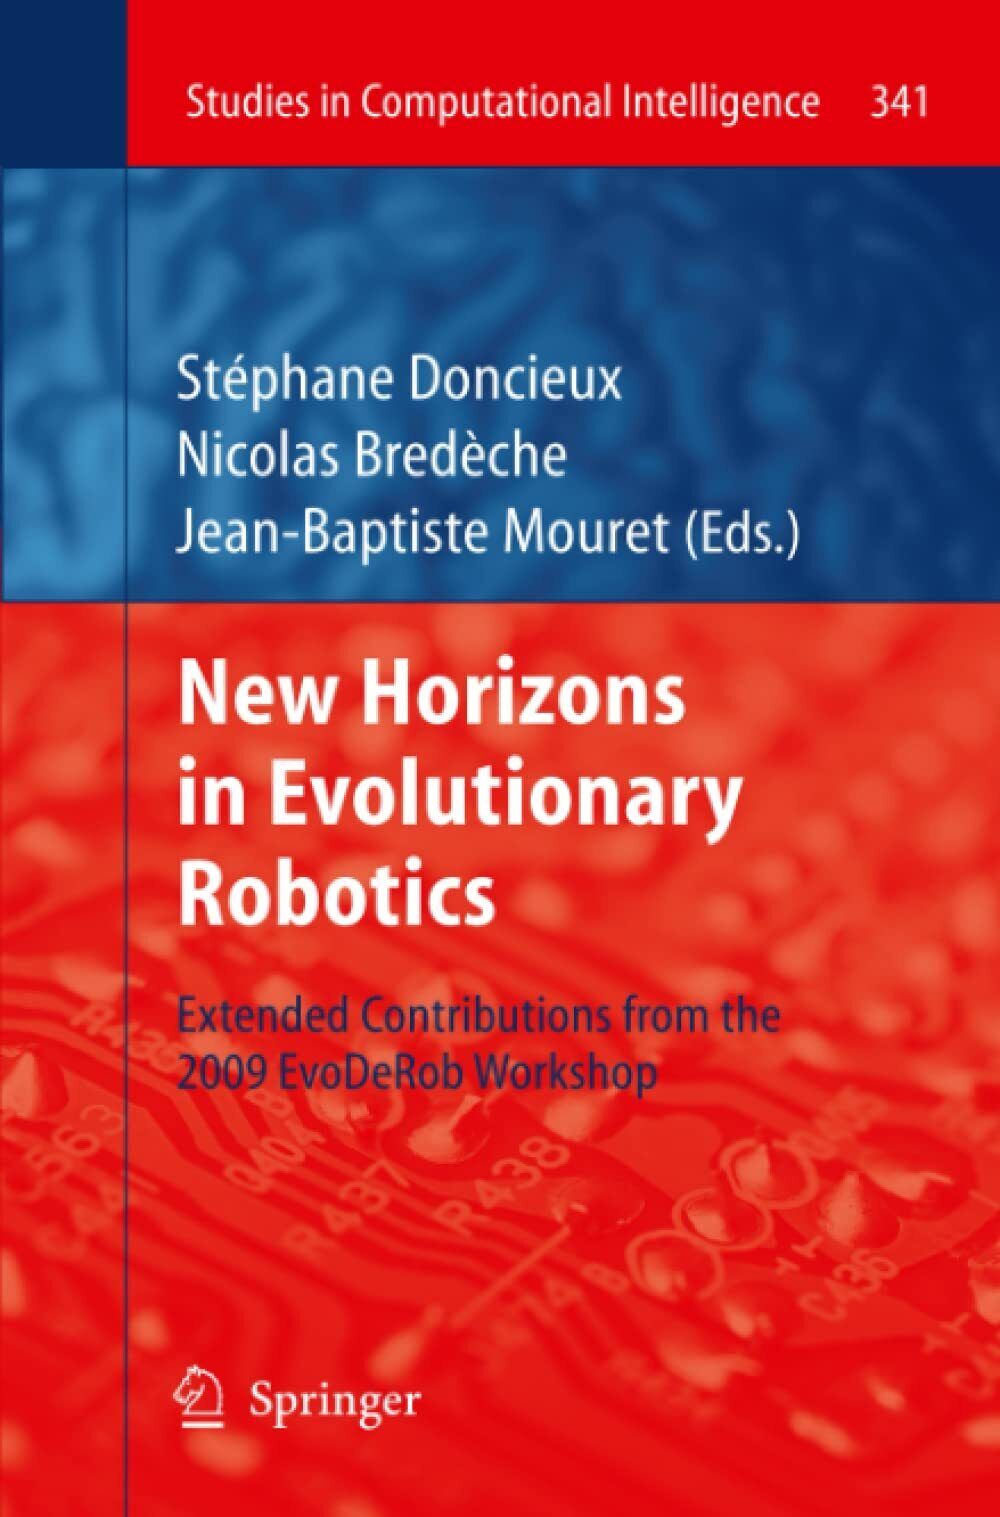 New Horizons in Evolutionary Robotics - St?phane Doncieux - Springer, 2013